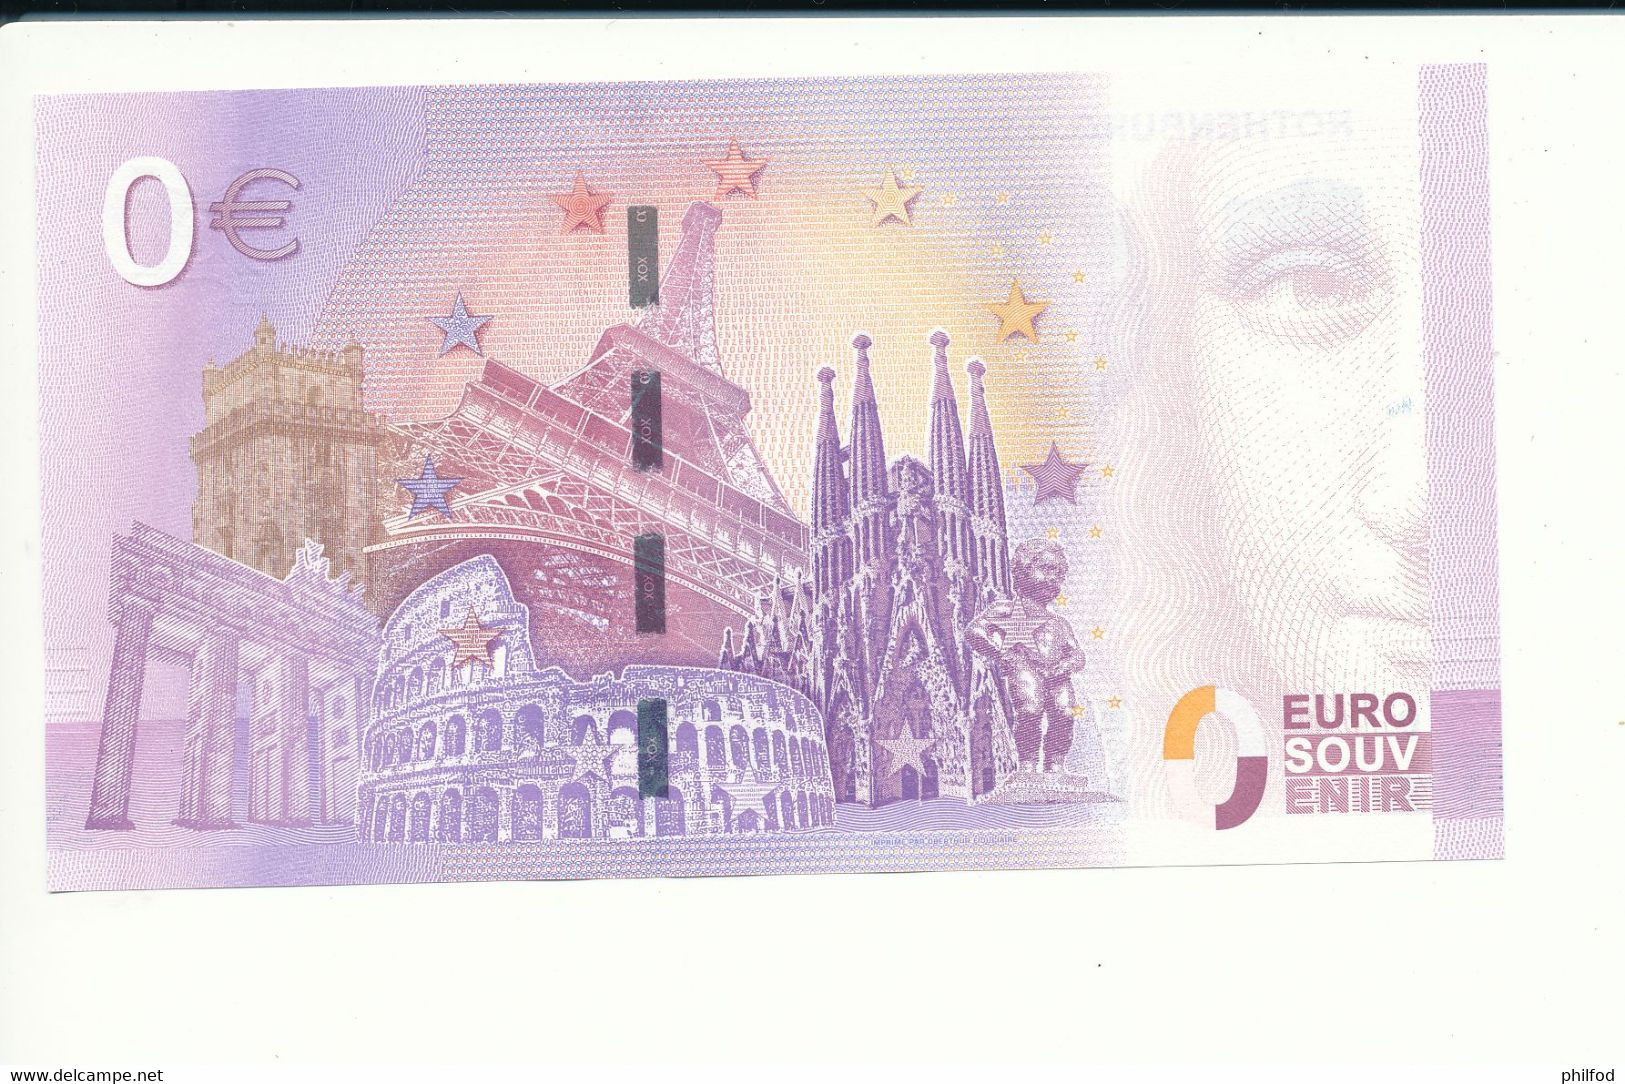 Billet Souvenir - 0 Euro - XEQE - 2017-1 - ROTHENBURG O.D. TAUBER - PLÖNLEIN - N° 2458 - Kilowaar - Bankbiljetten